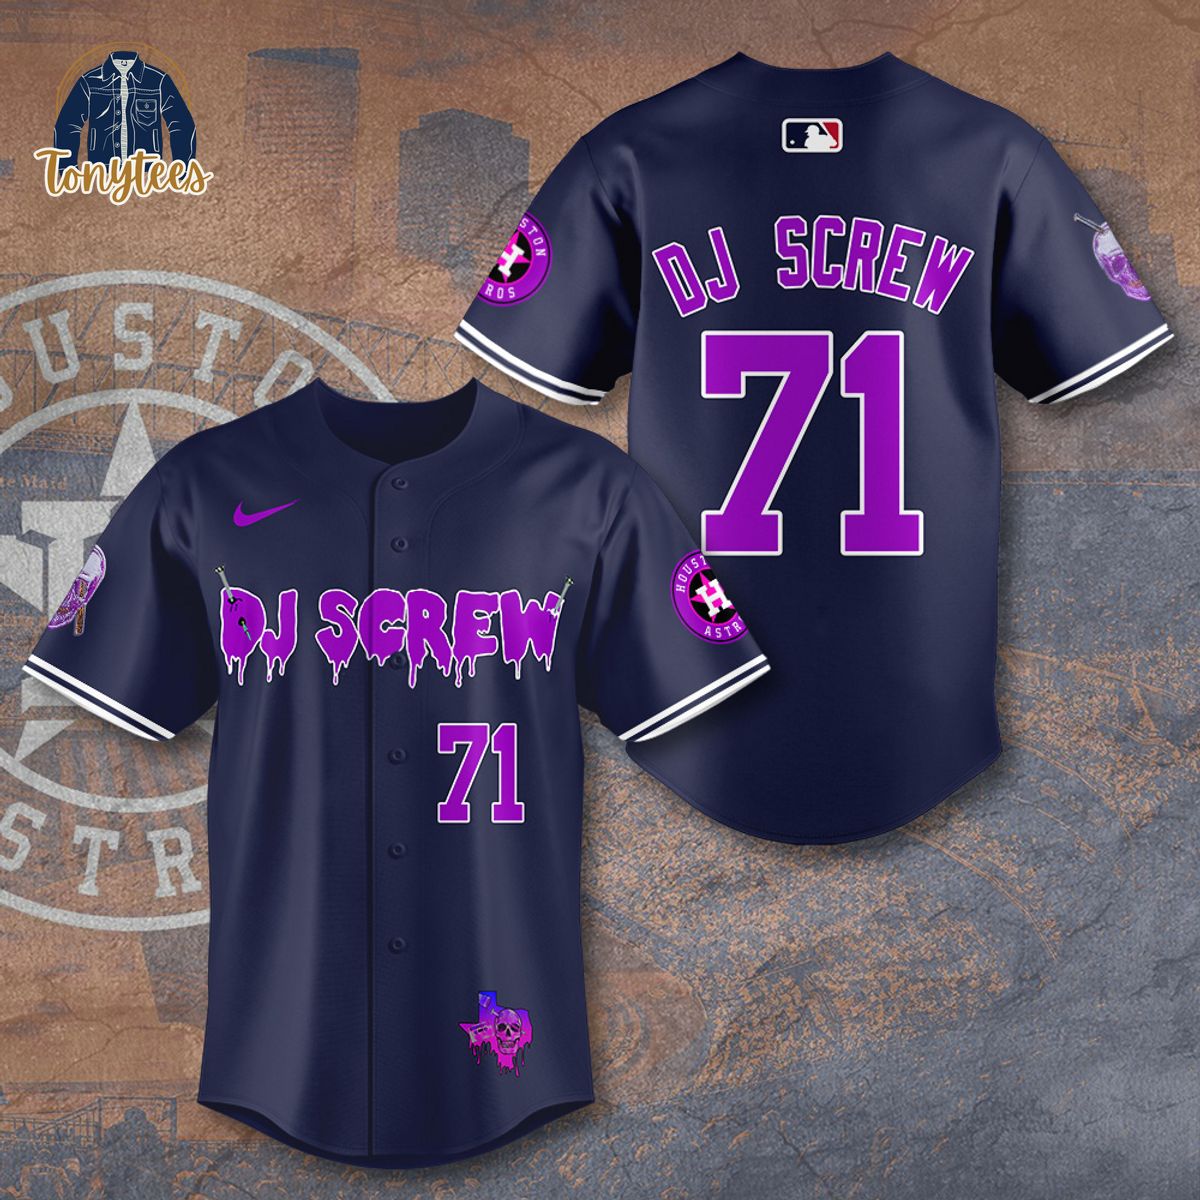 DJ Screw x Houston Astros Baseball Jersey